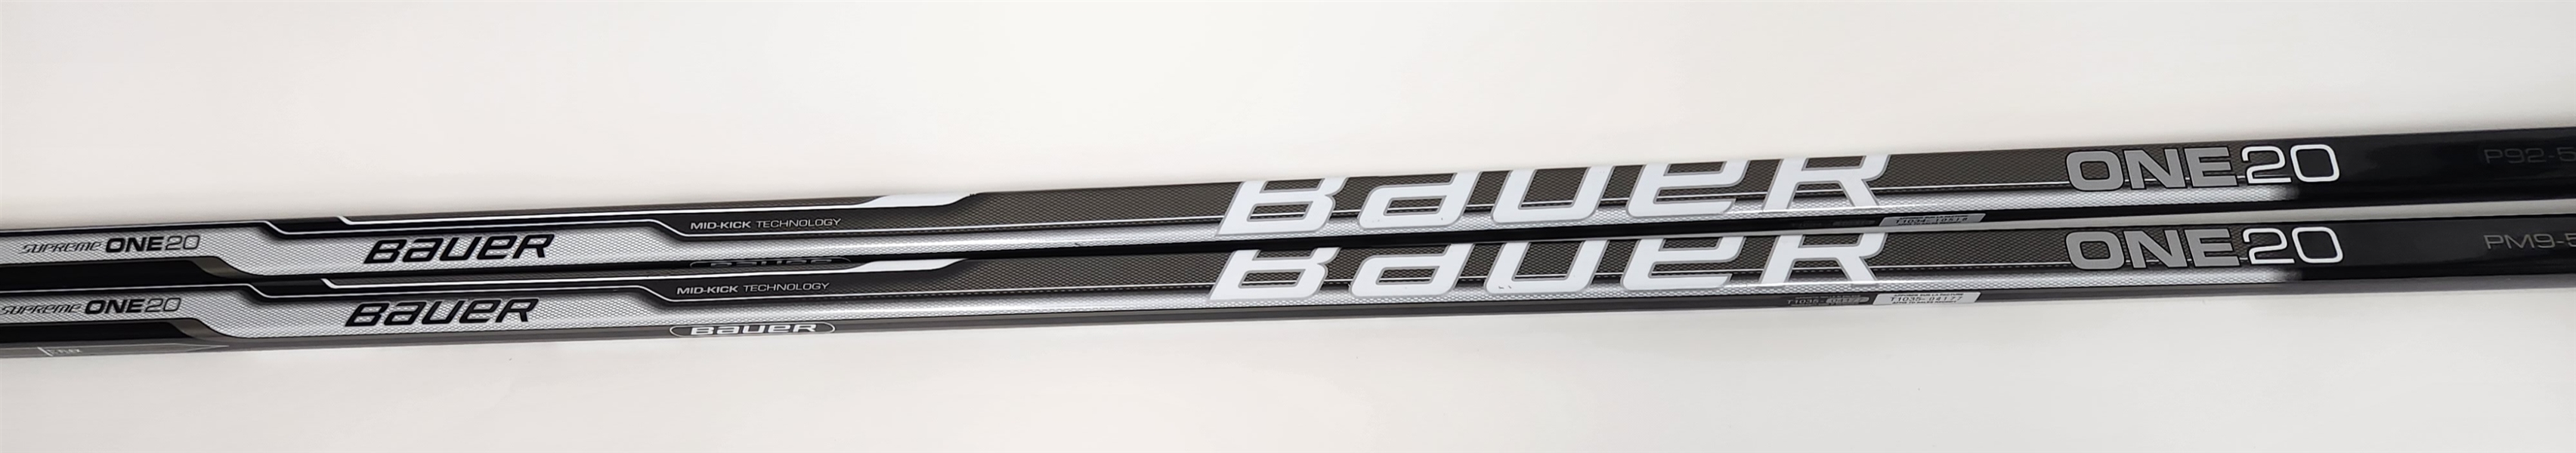 Lot of (2) Claude Giroux Autographed Bauer ONE-20 PM9-52FLEX Hockey Sticks (JSA Certs)